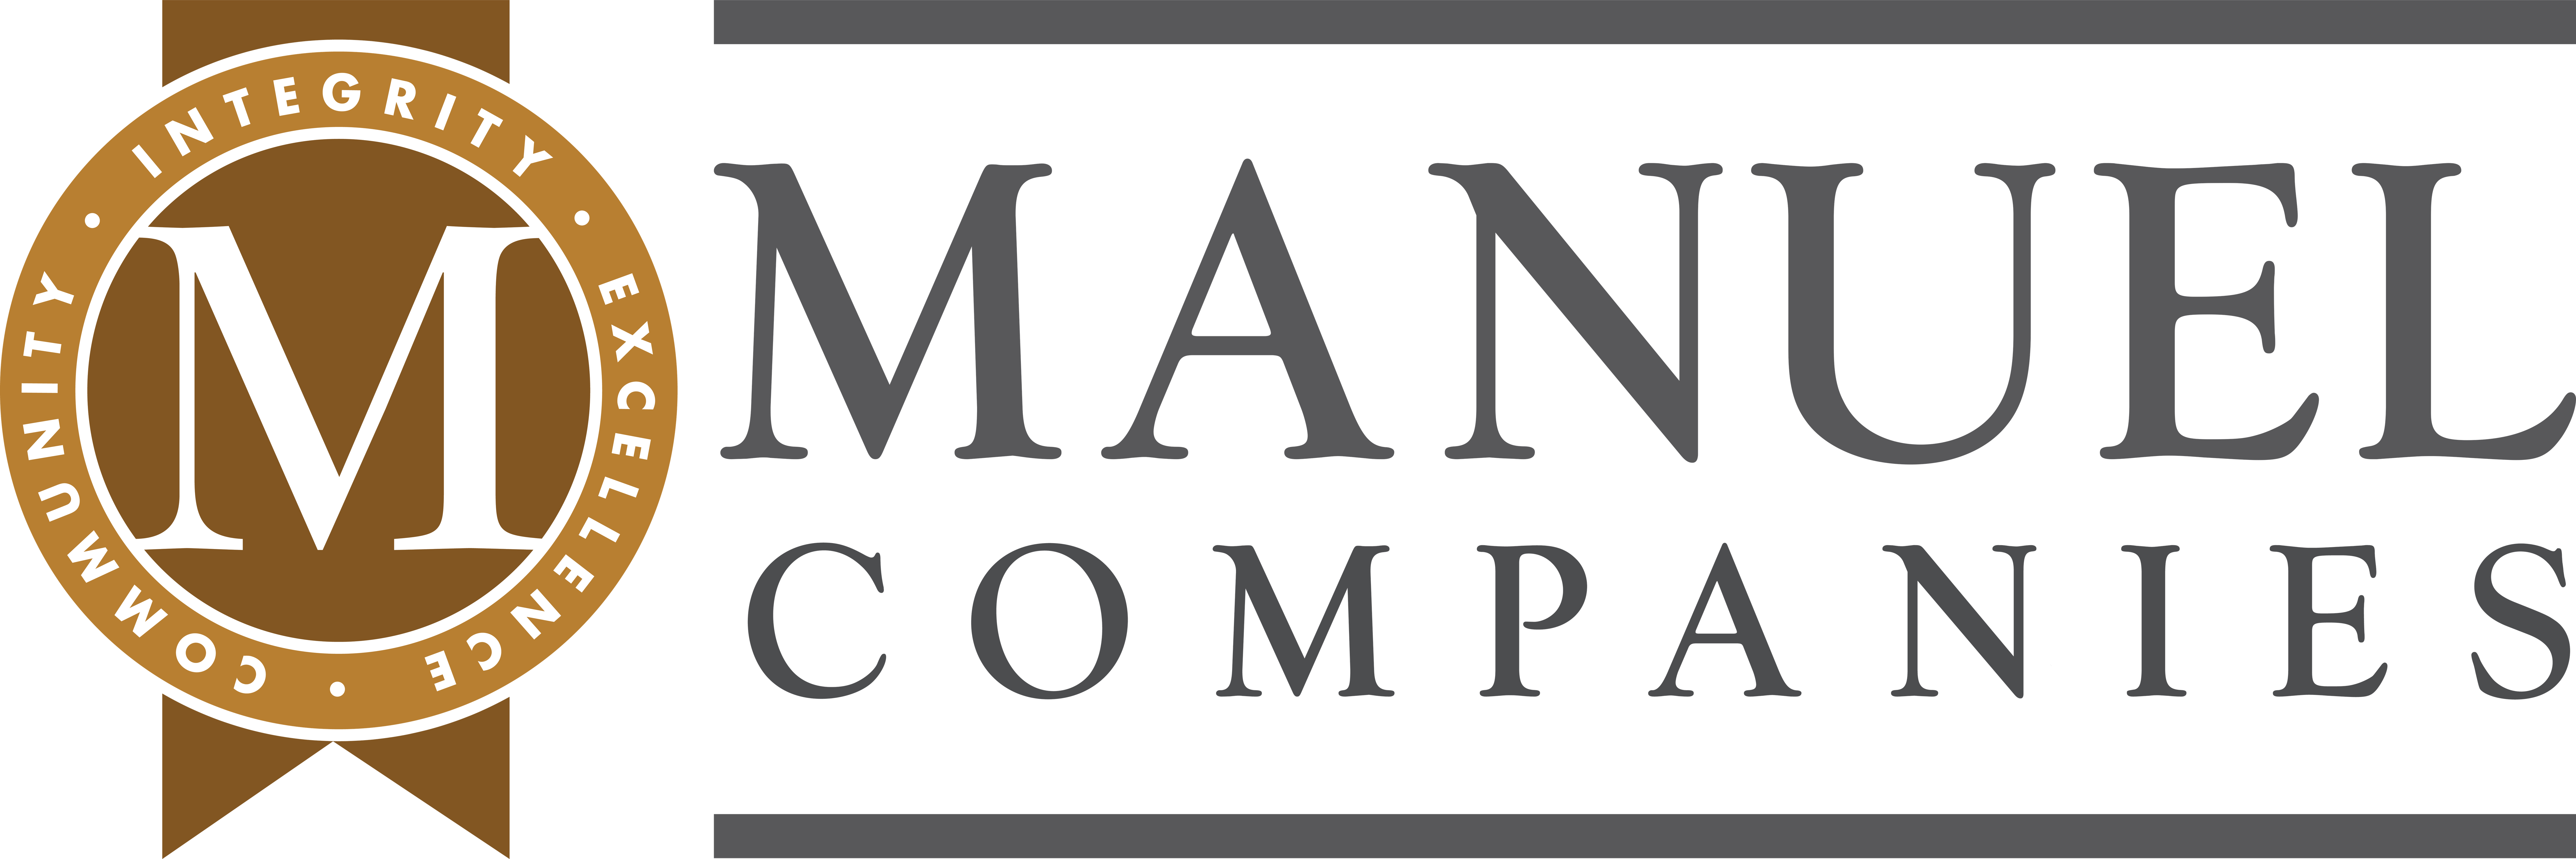 Manuel Companies 